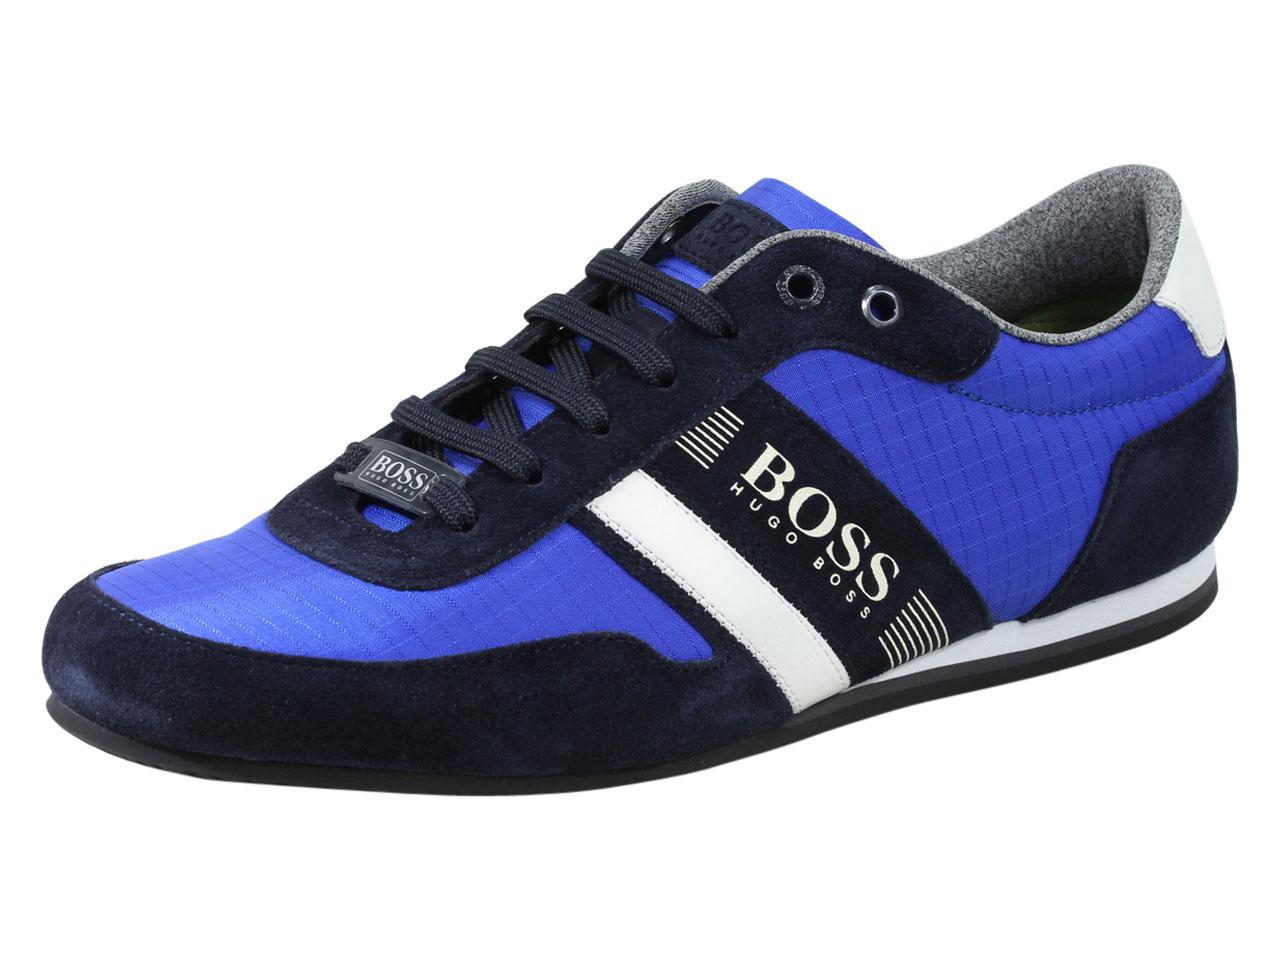 Hugo Boss Men's Lighter Memory Foam Trainers Sneakers Shoes | JoyLot.com